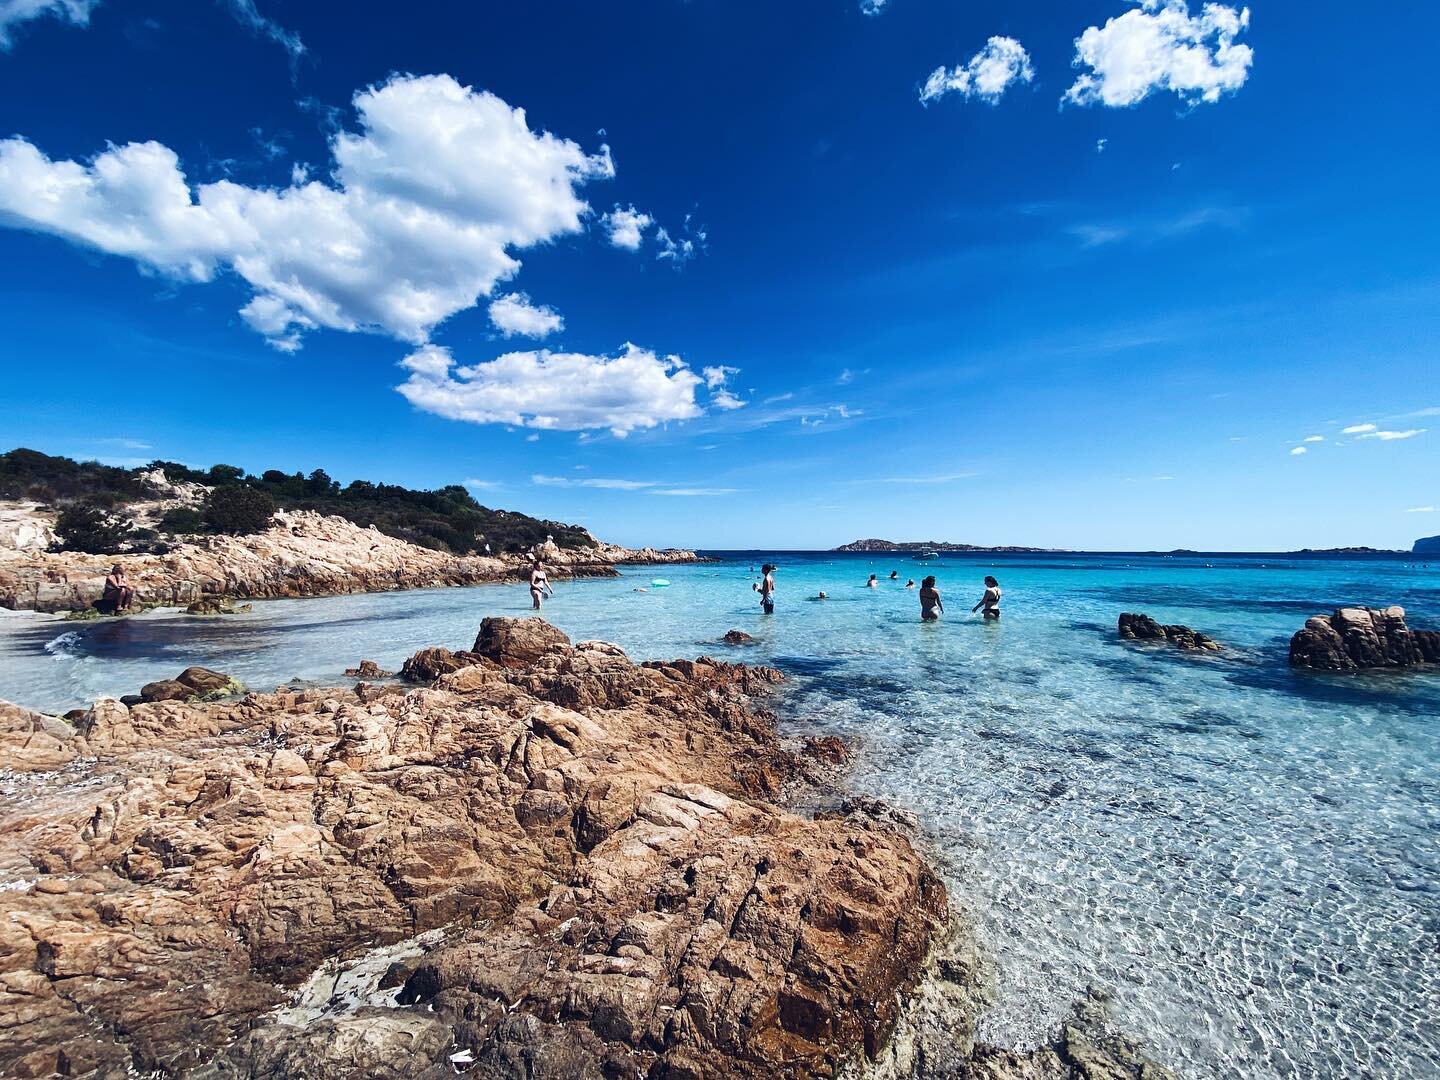 Sardinian blues 🌊
.
.
.
.
.
.
#menories #summer #Sardegna #timewithfriends #Sardinia #beach #sea #Italy #blue #blu #mare #landscape  #mare #sardegna #estate #spiaggia #beach #travel #Italic  #beachlife  #saltescape #vitaminsea #saltlife #bestbeaches